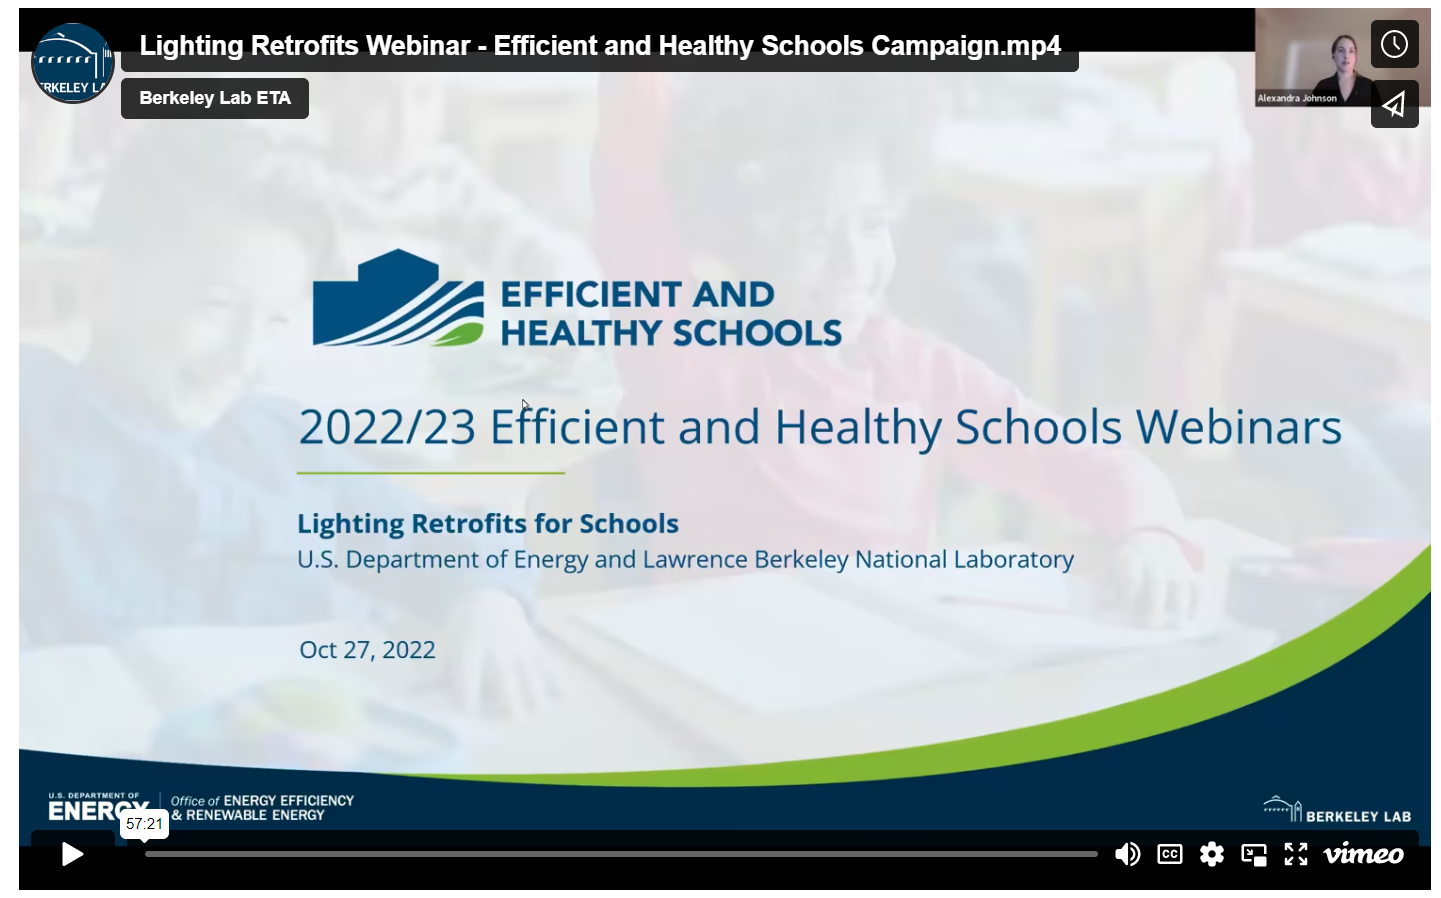 Webinar opening slide with title "Lighting Retrofits for Schools"